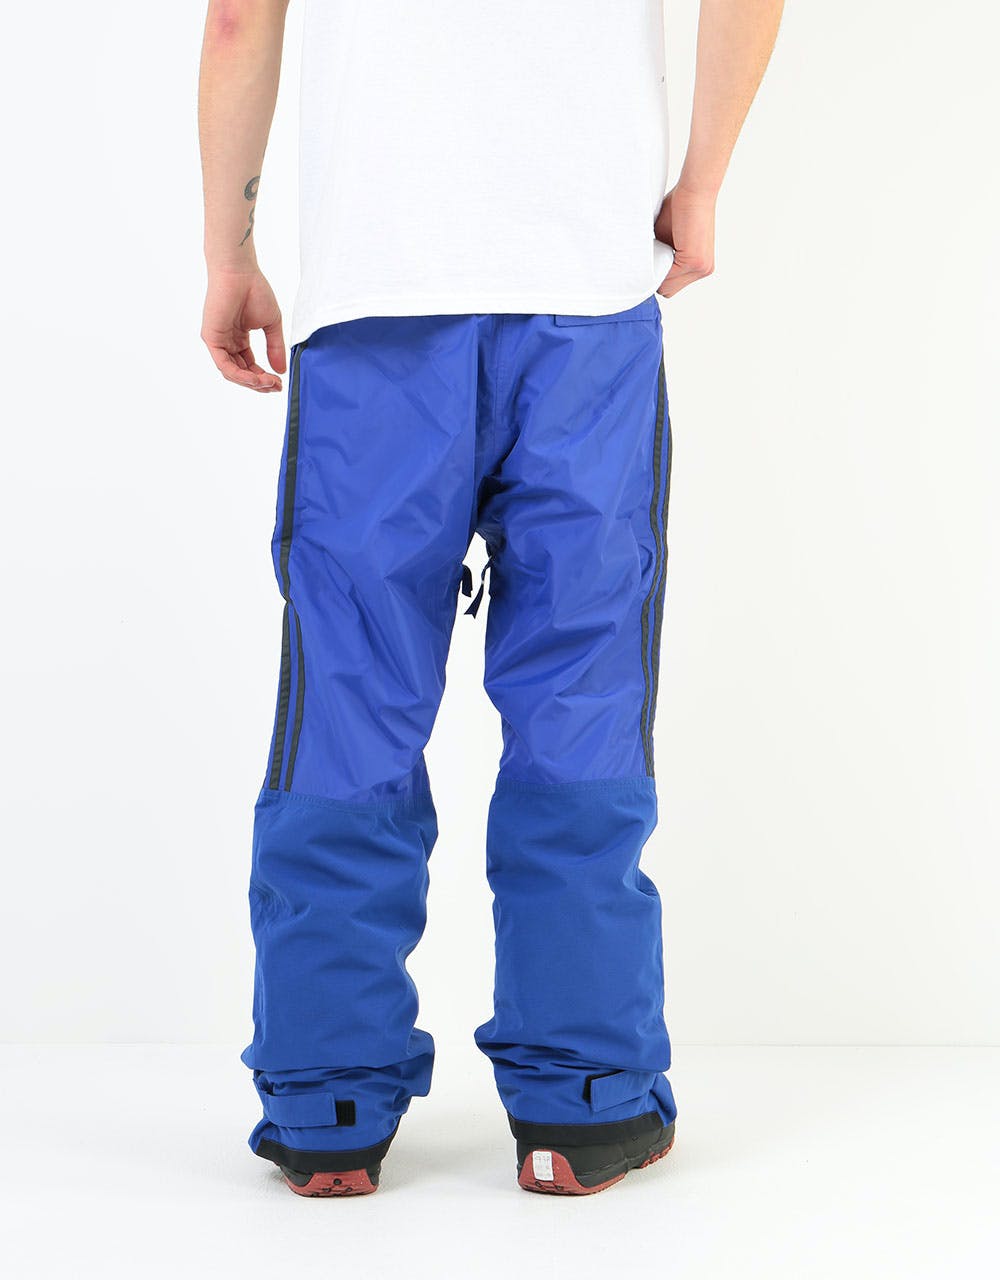 Adidas Riding Pant 2020 Snowboard Pants - Active Blue/Collegiate Gold